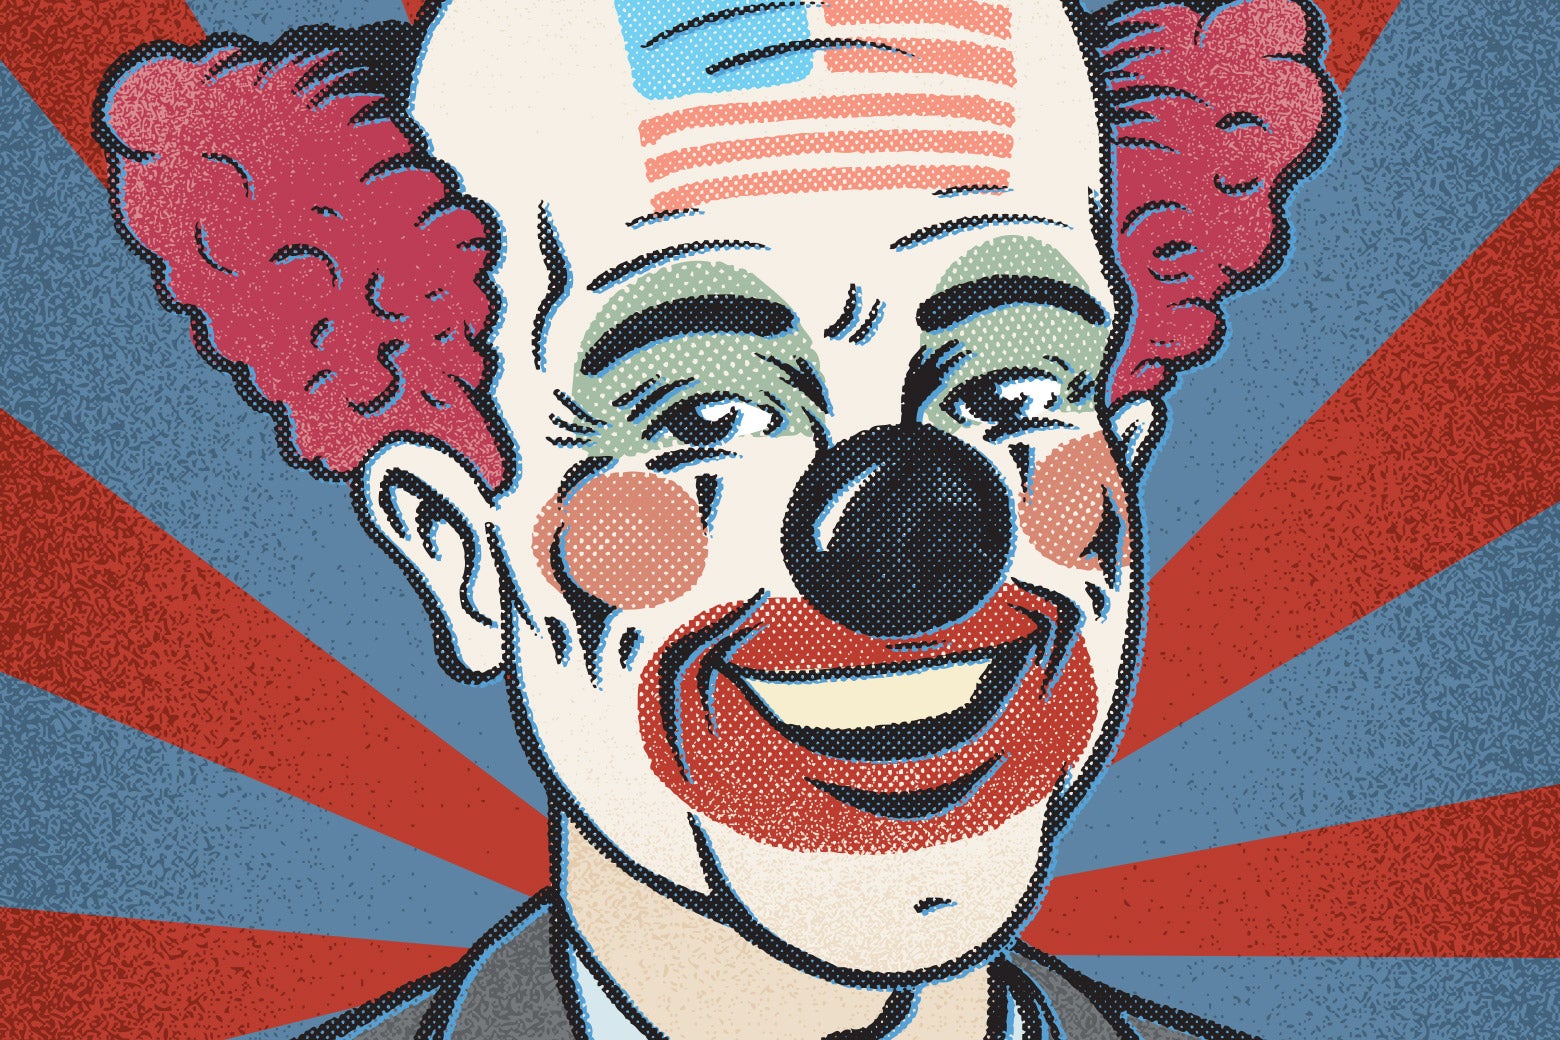 An illustration of a clown.